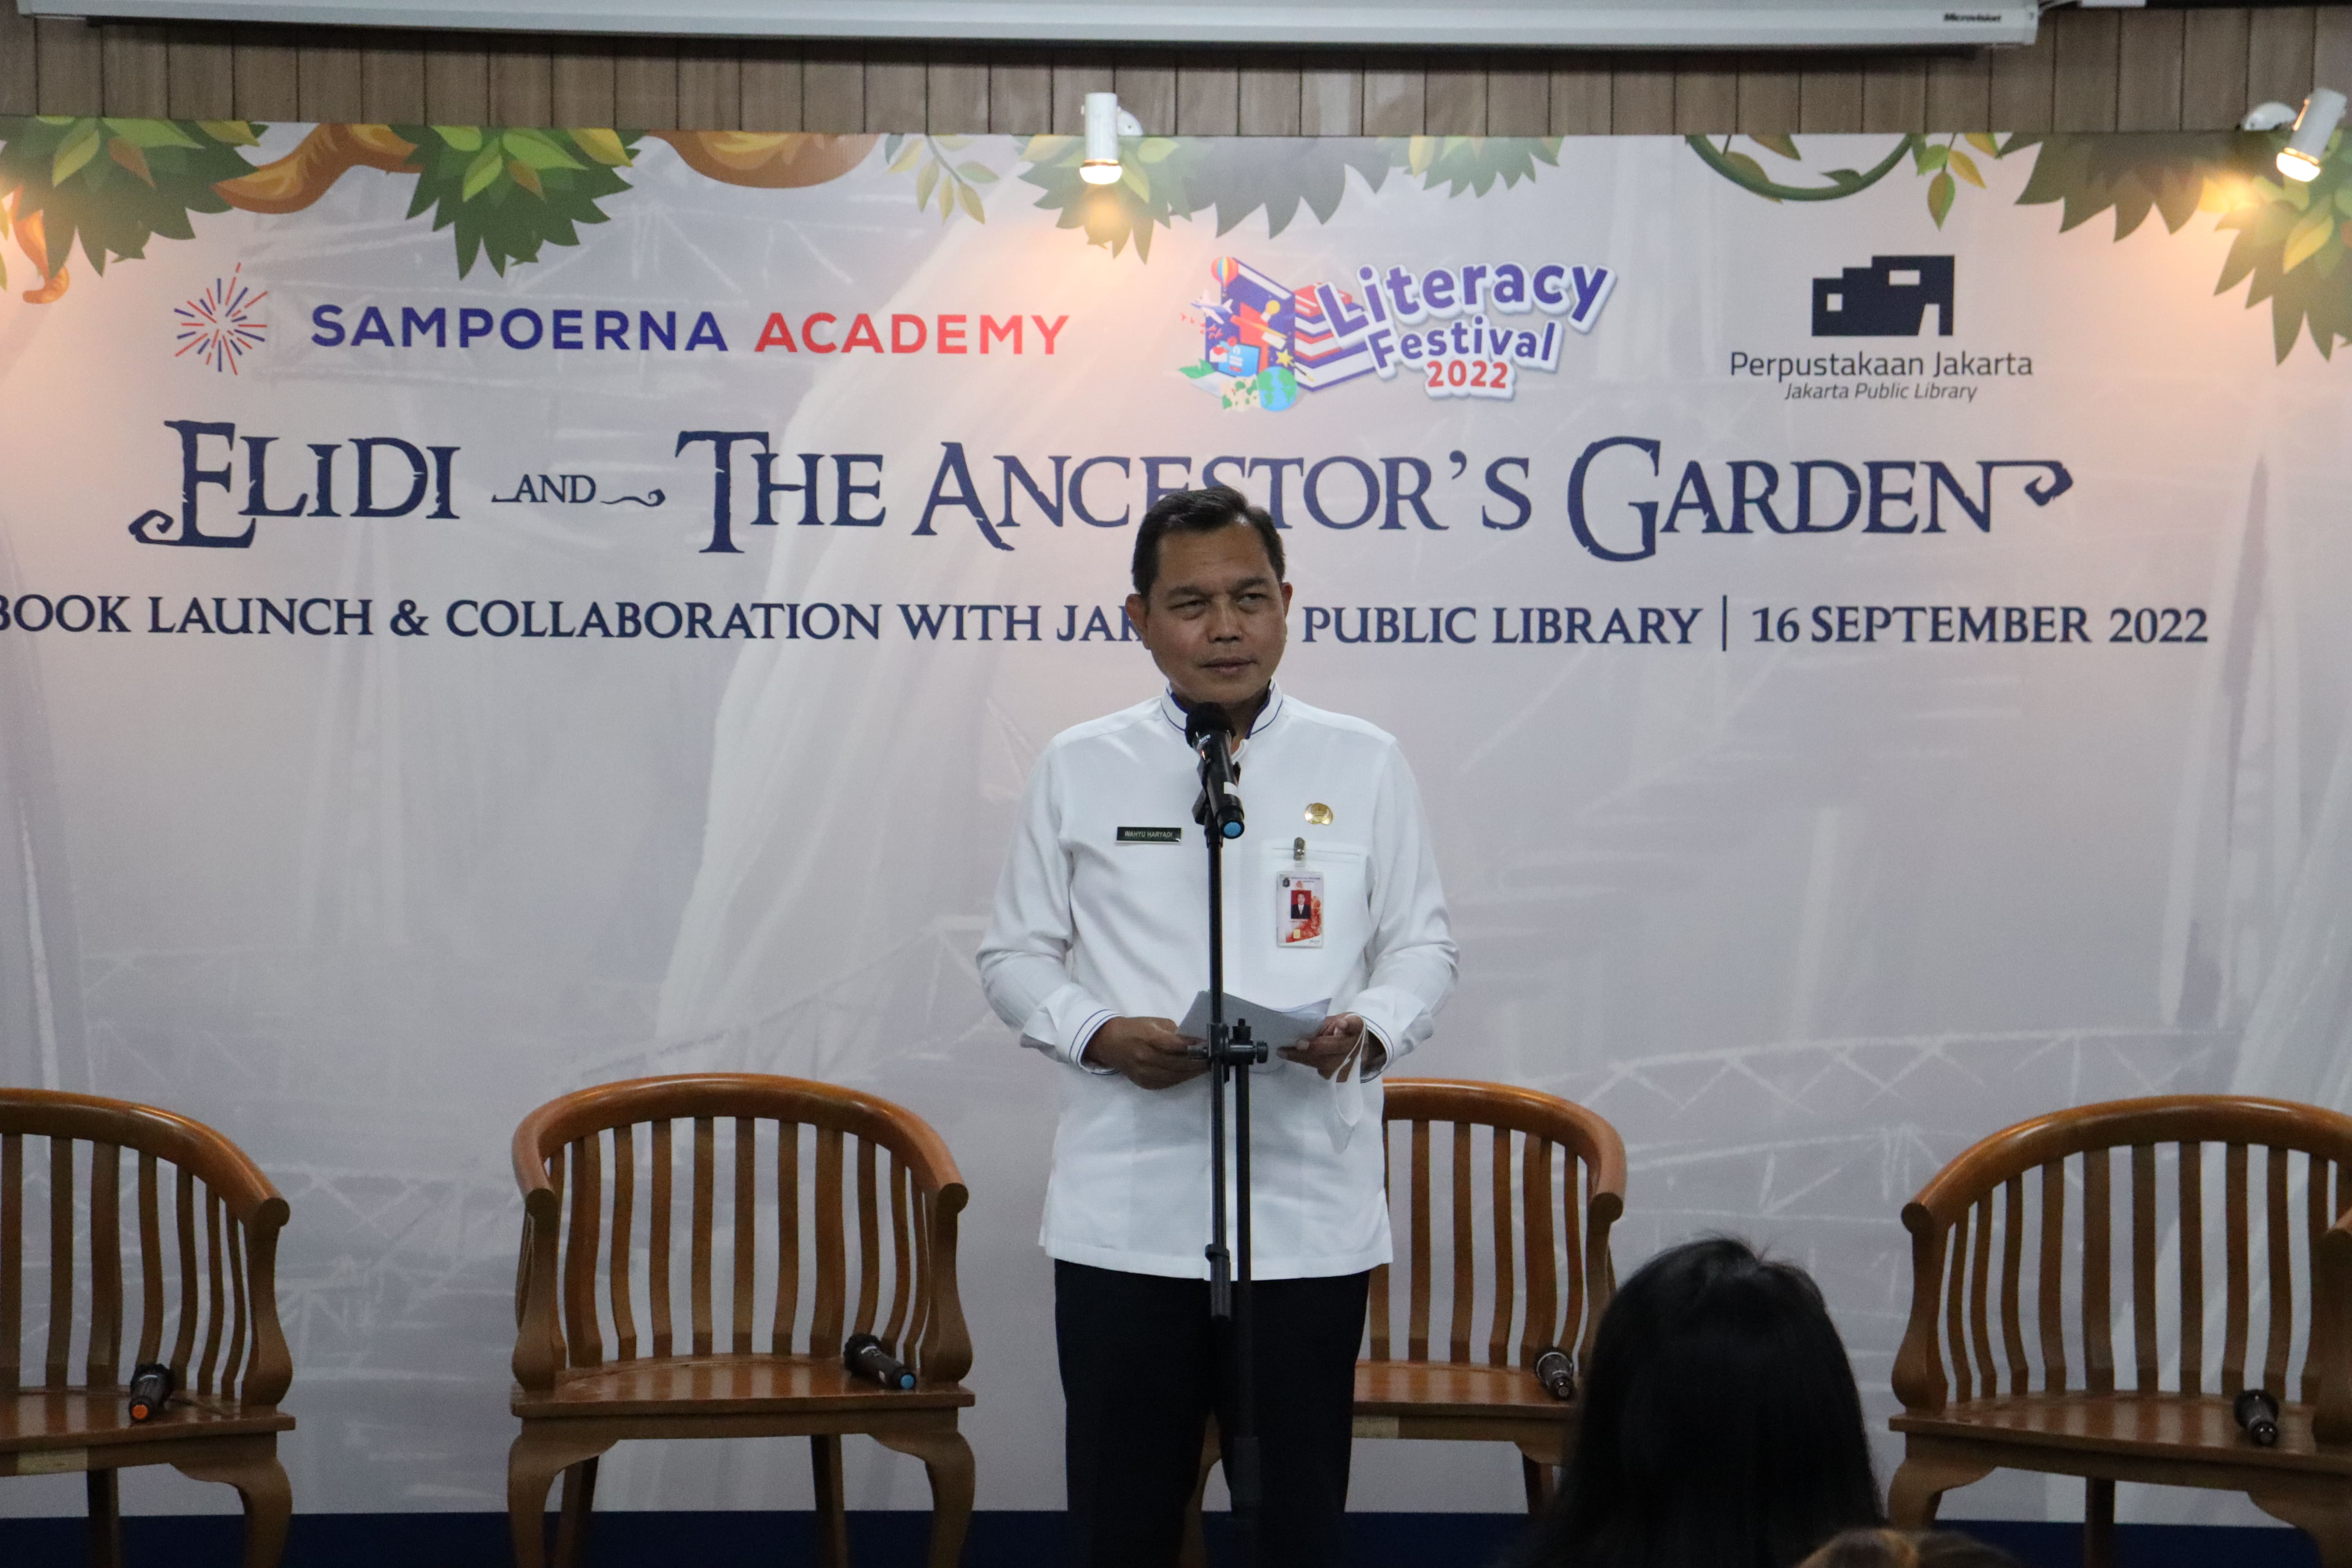 Peluncuran Buku & Sharing Session Bersama School Director Sampoerna Academy